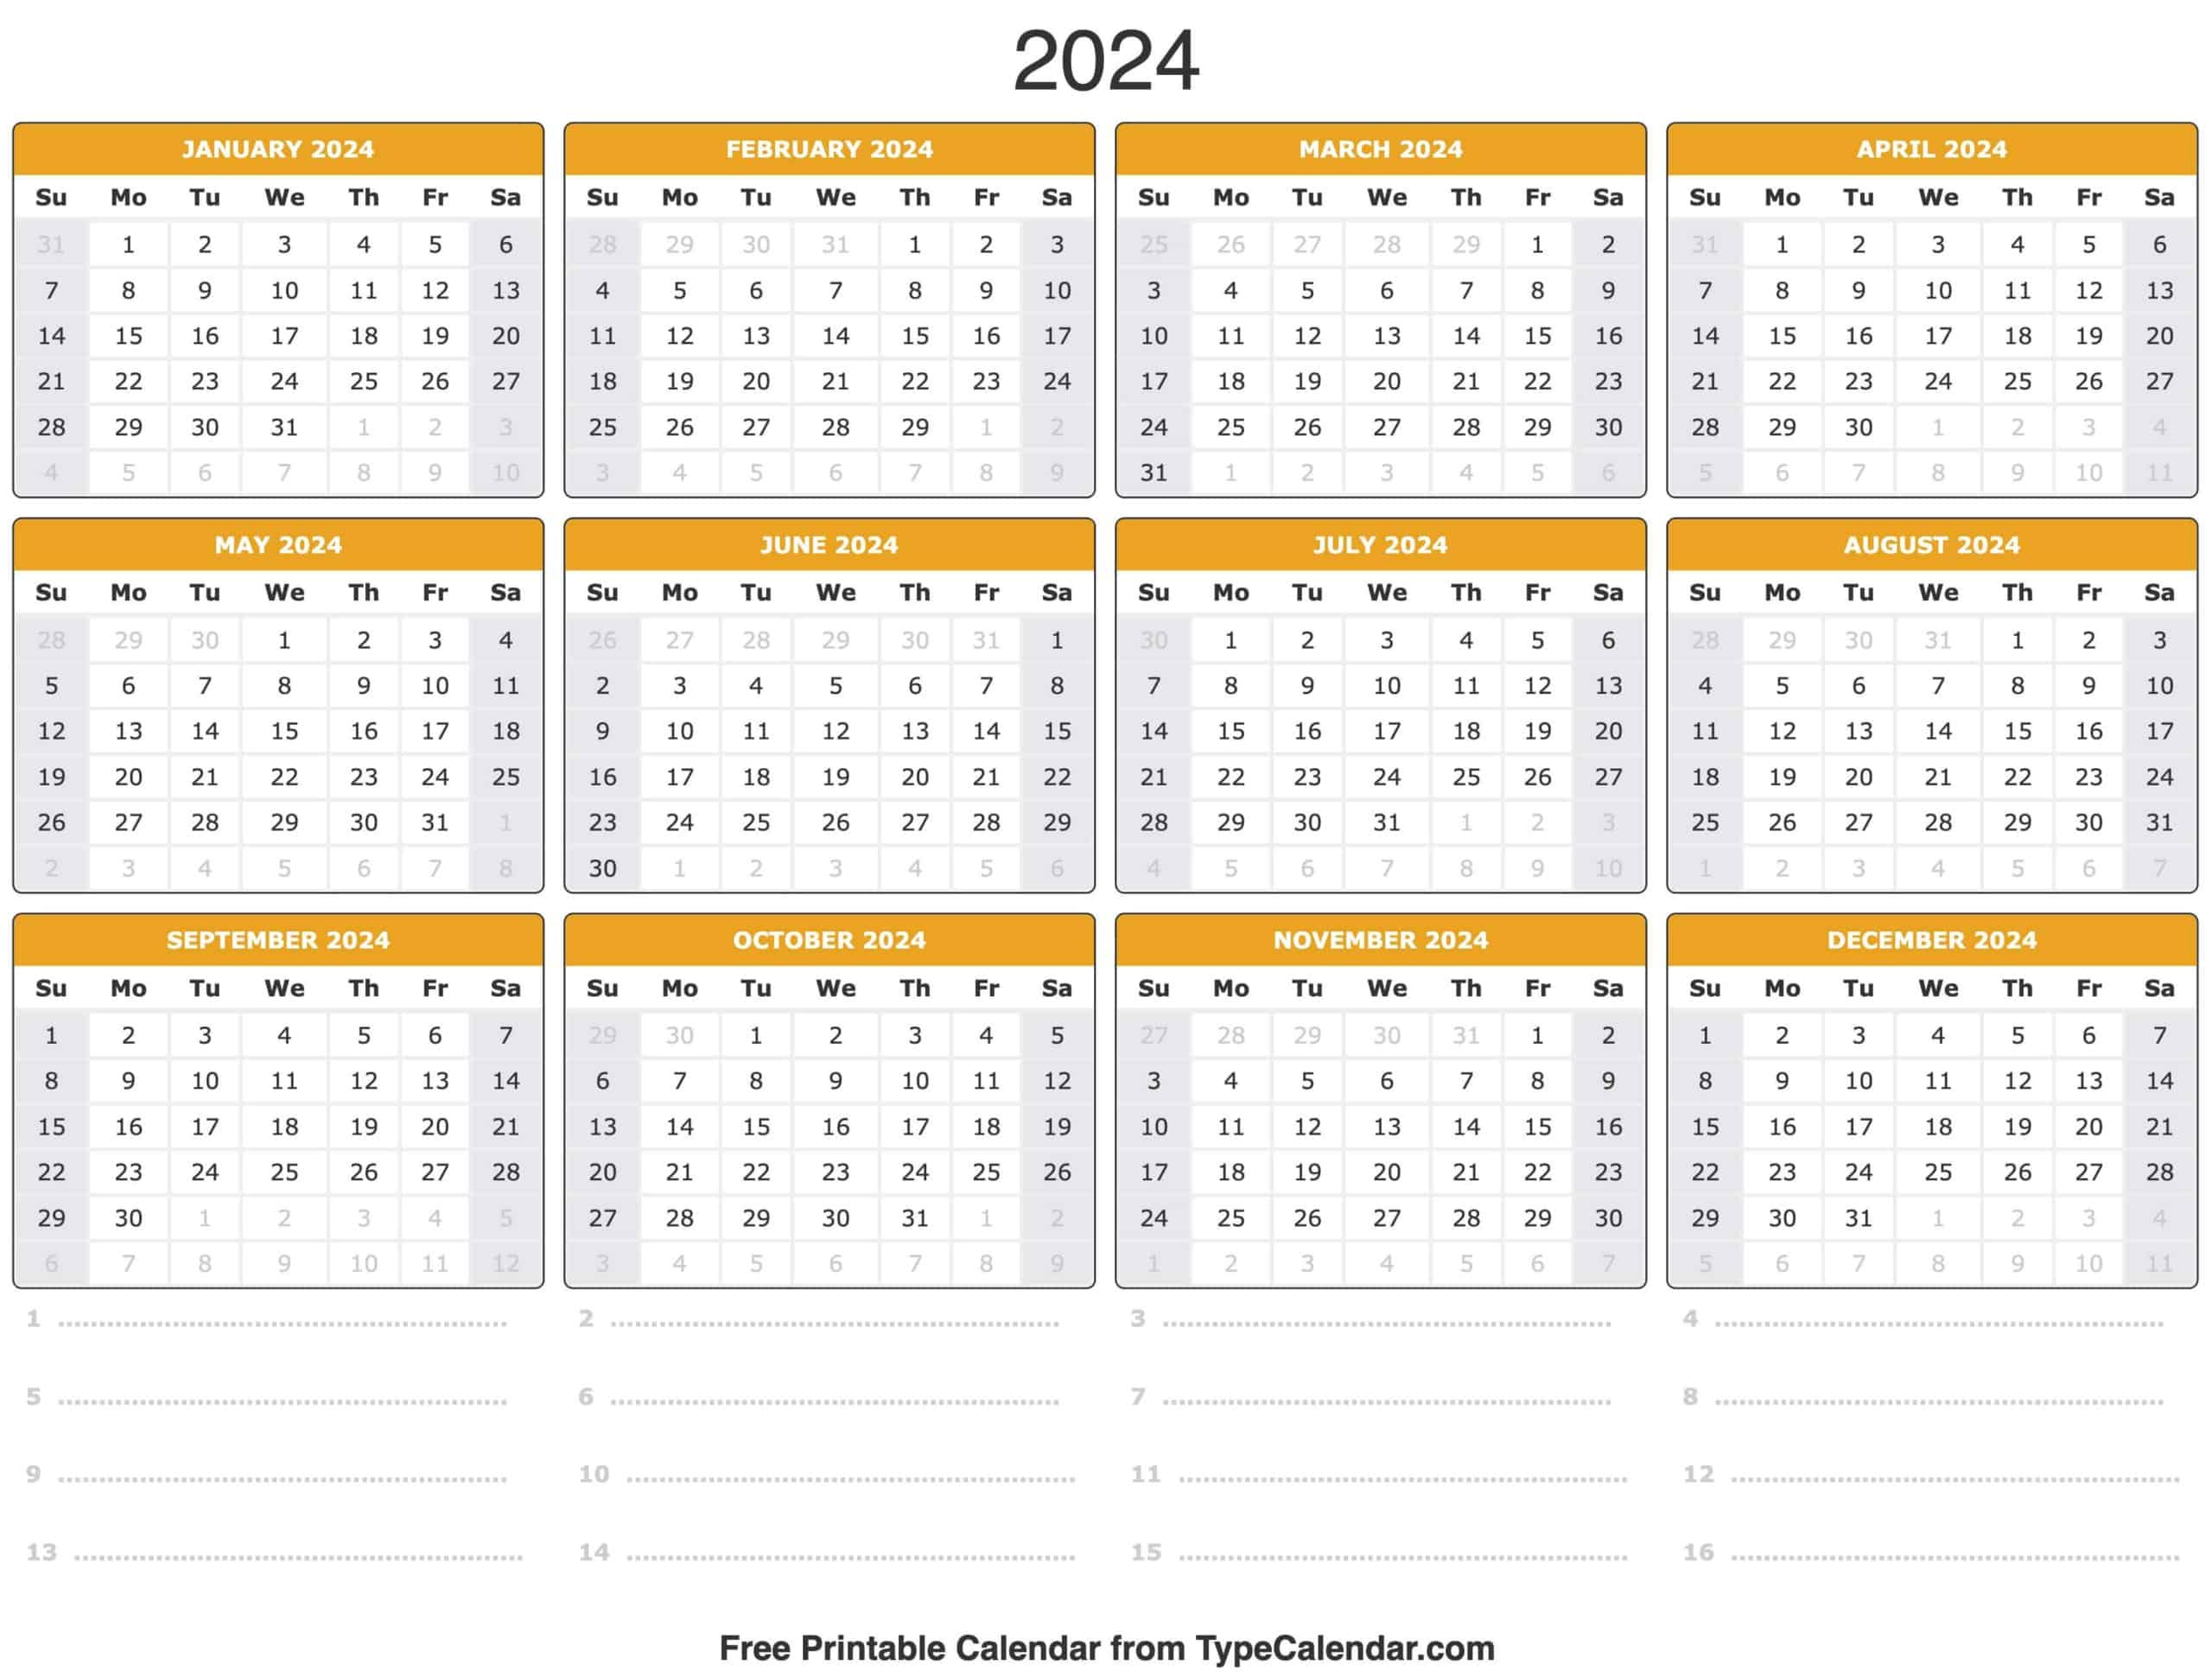 2024 Calendar: Free Printable Calendar With Holidays within Free Printable Calendar 2024 Windows